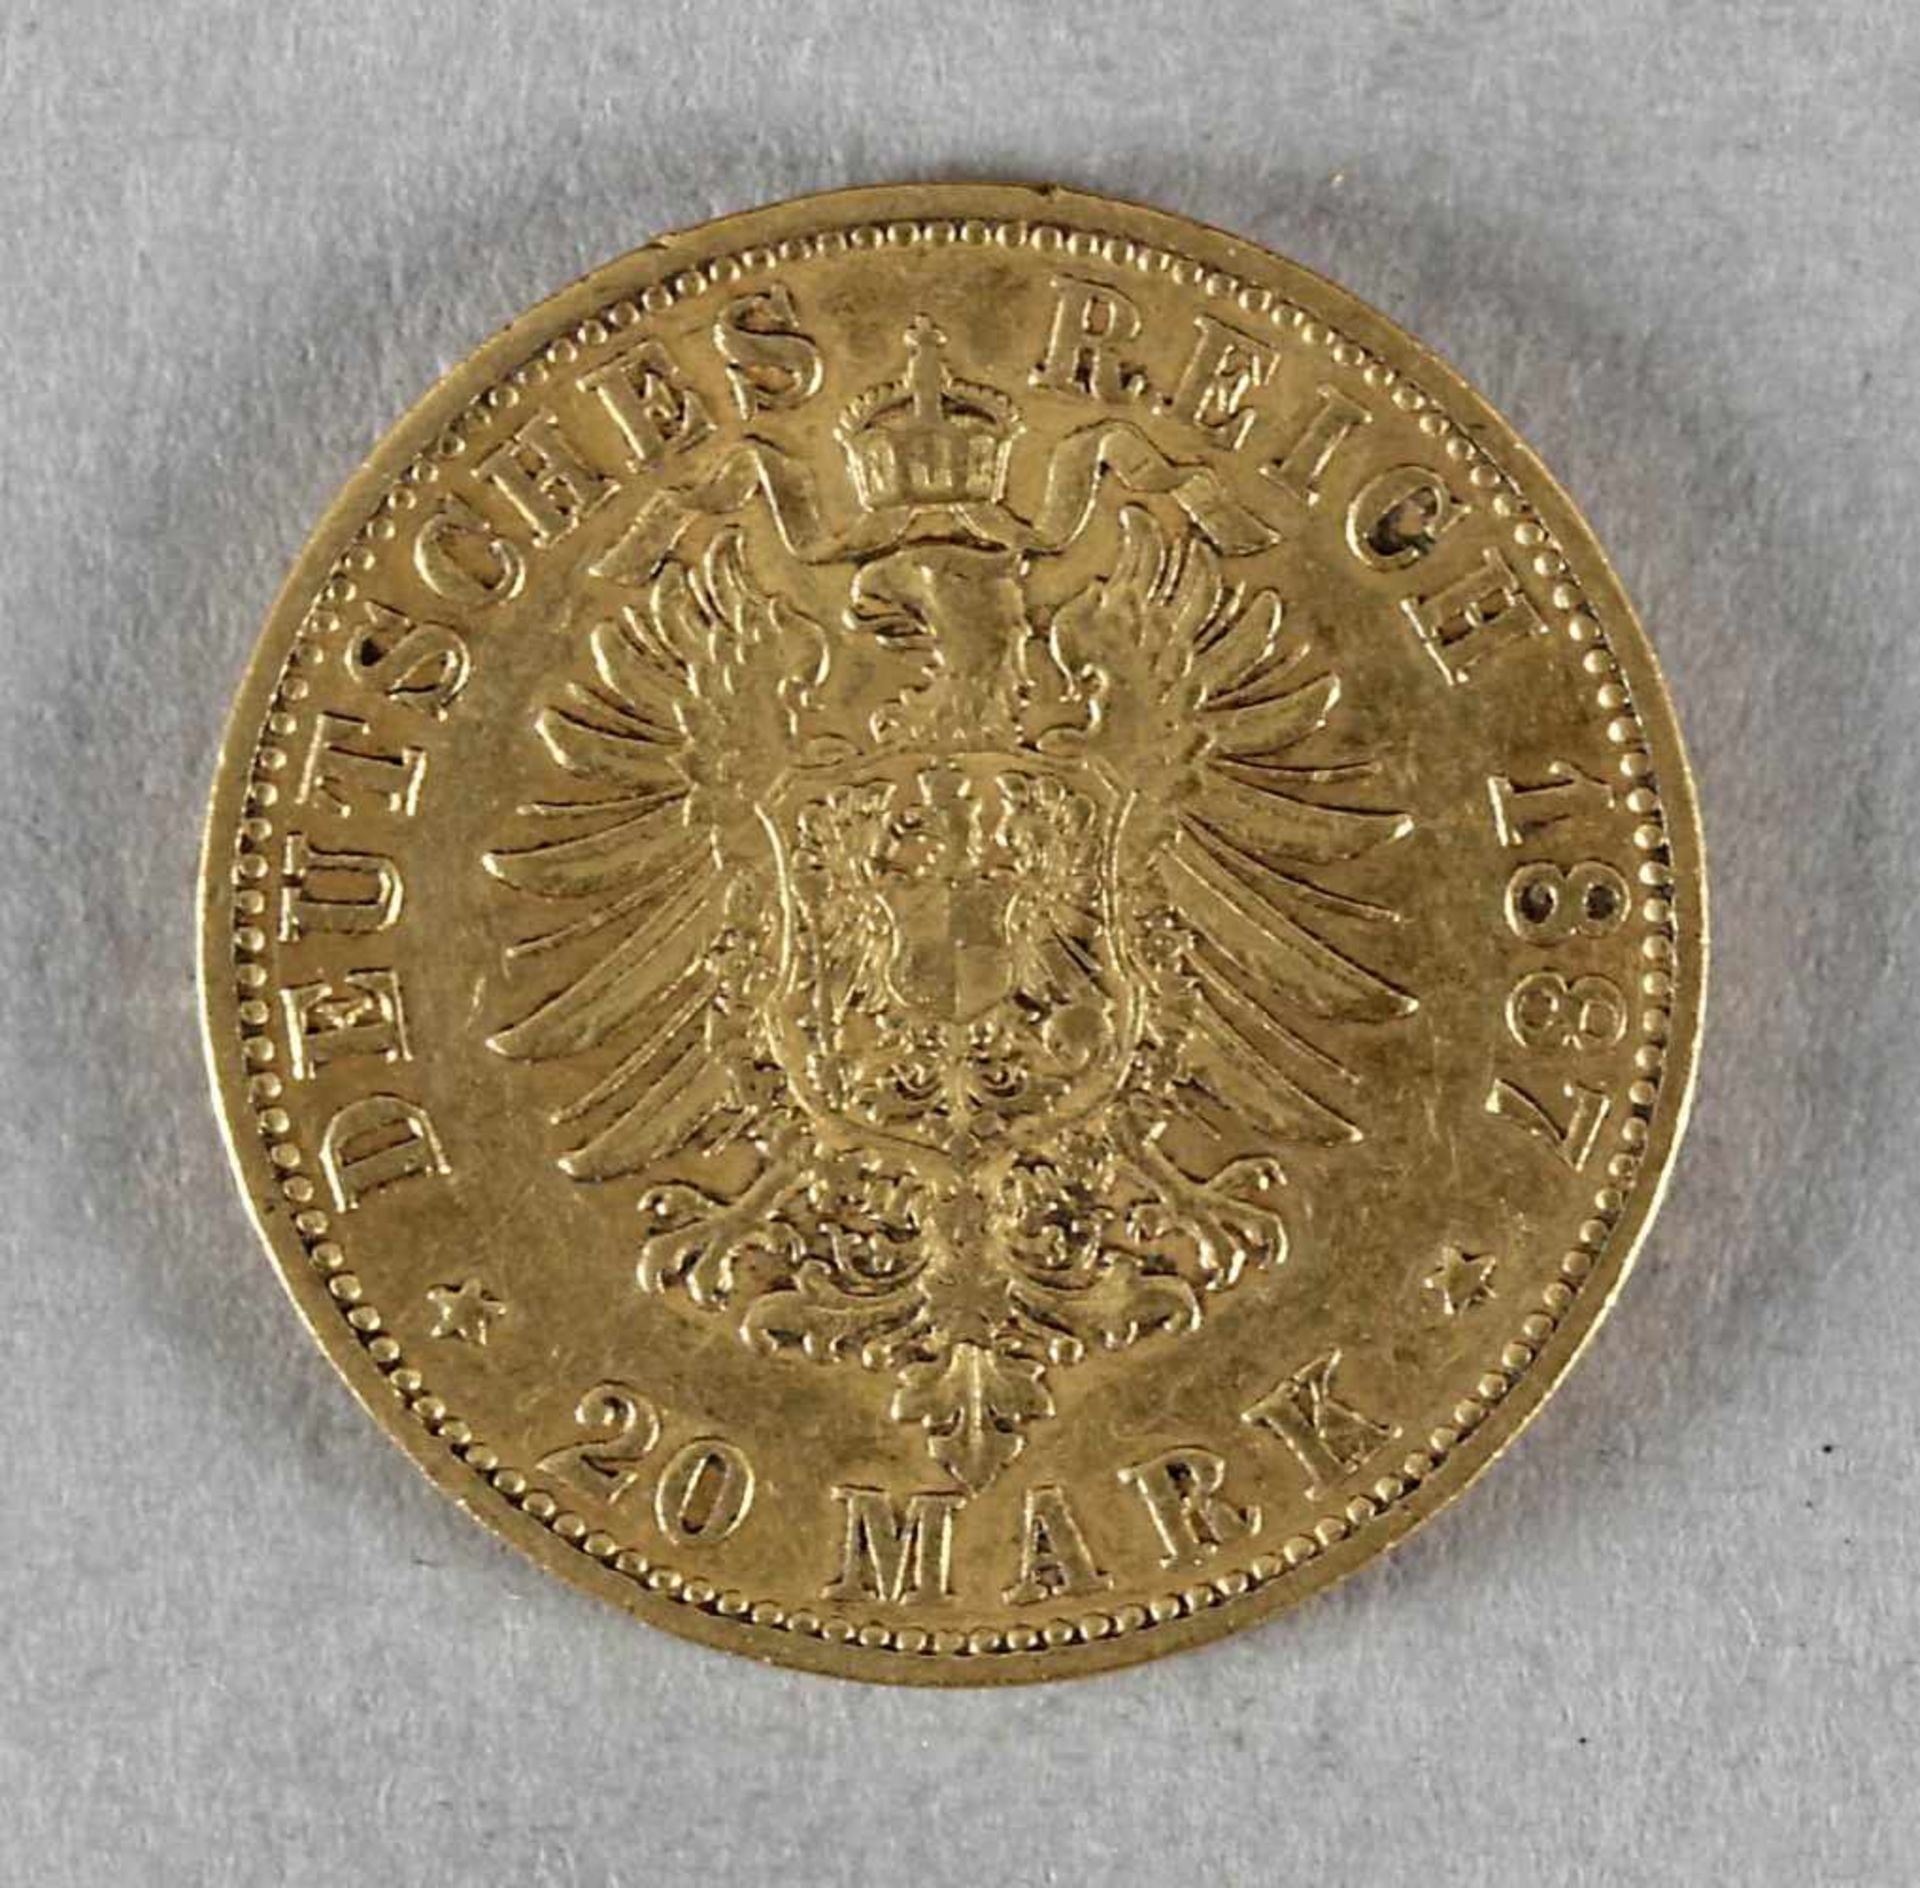 Goldmünze, 20 Mark, Hamburg, 1887 J - Image 2 of 2